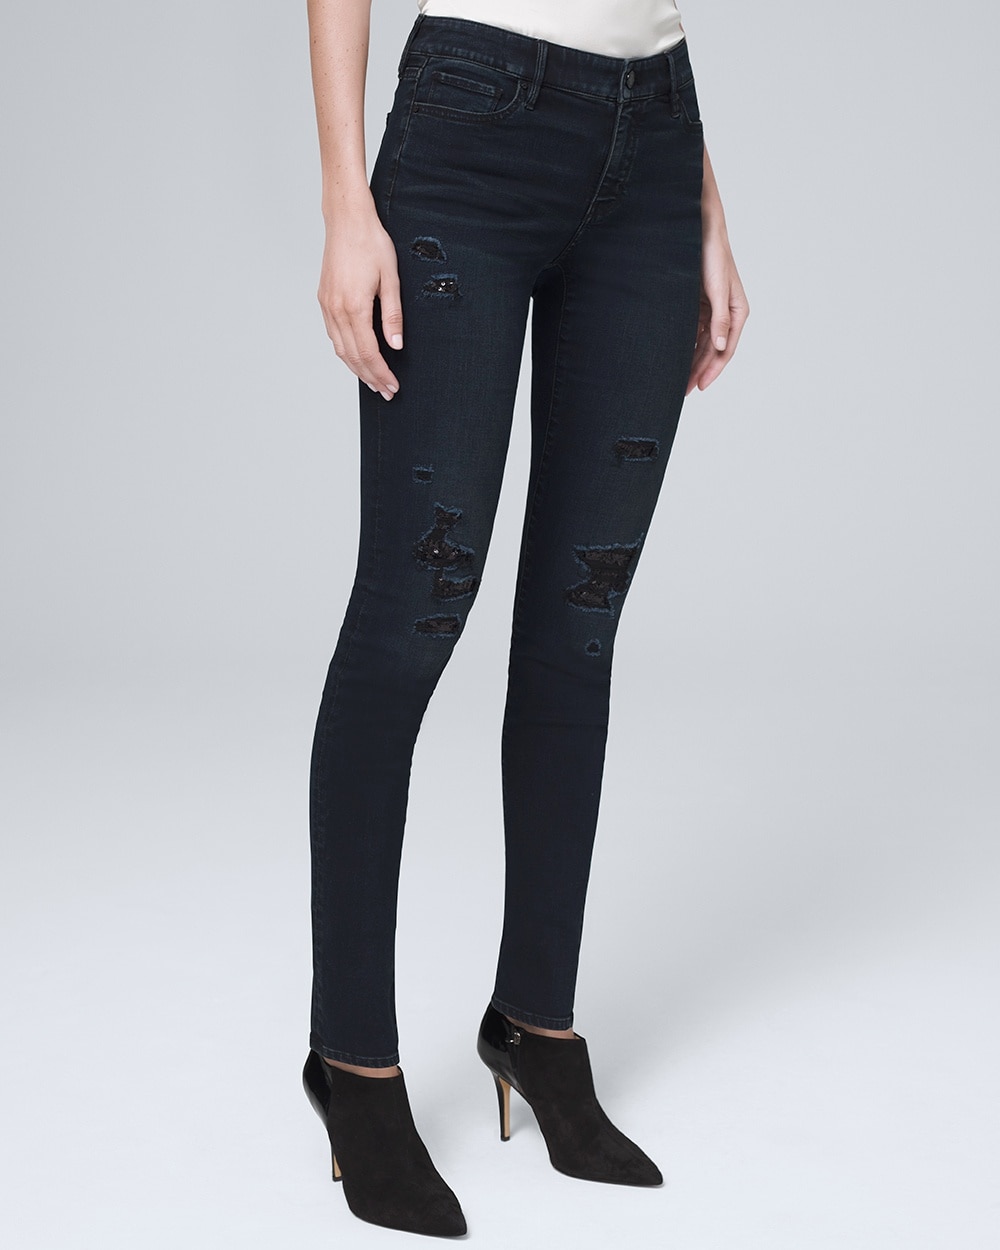 black sequin jeans